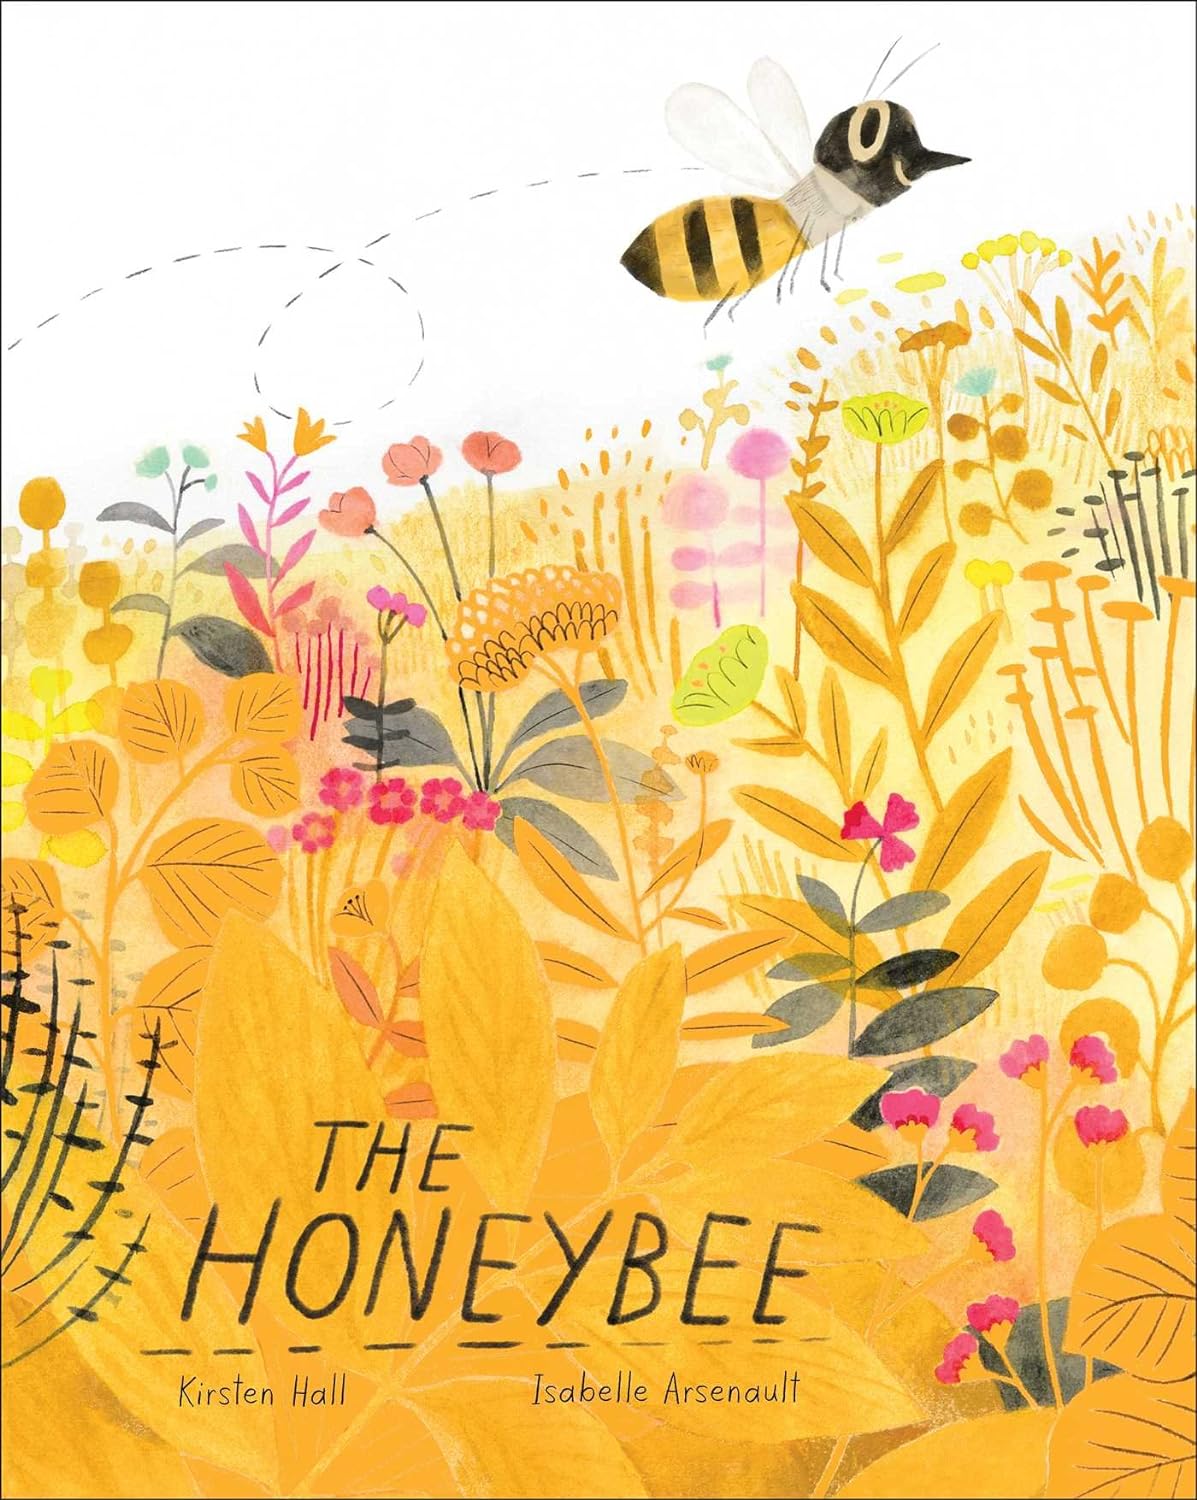 Image for "The Honeybee"